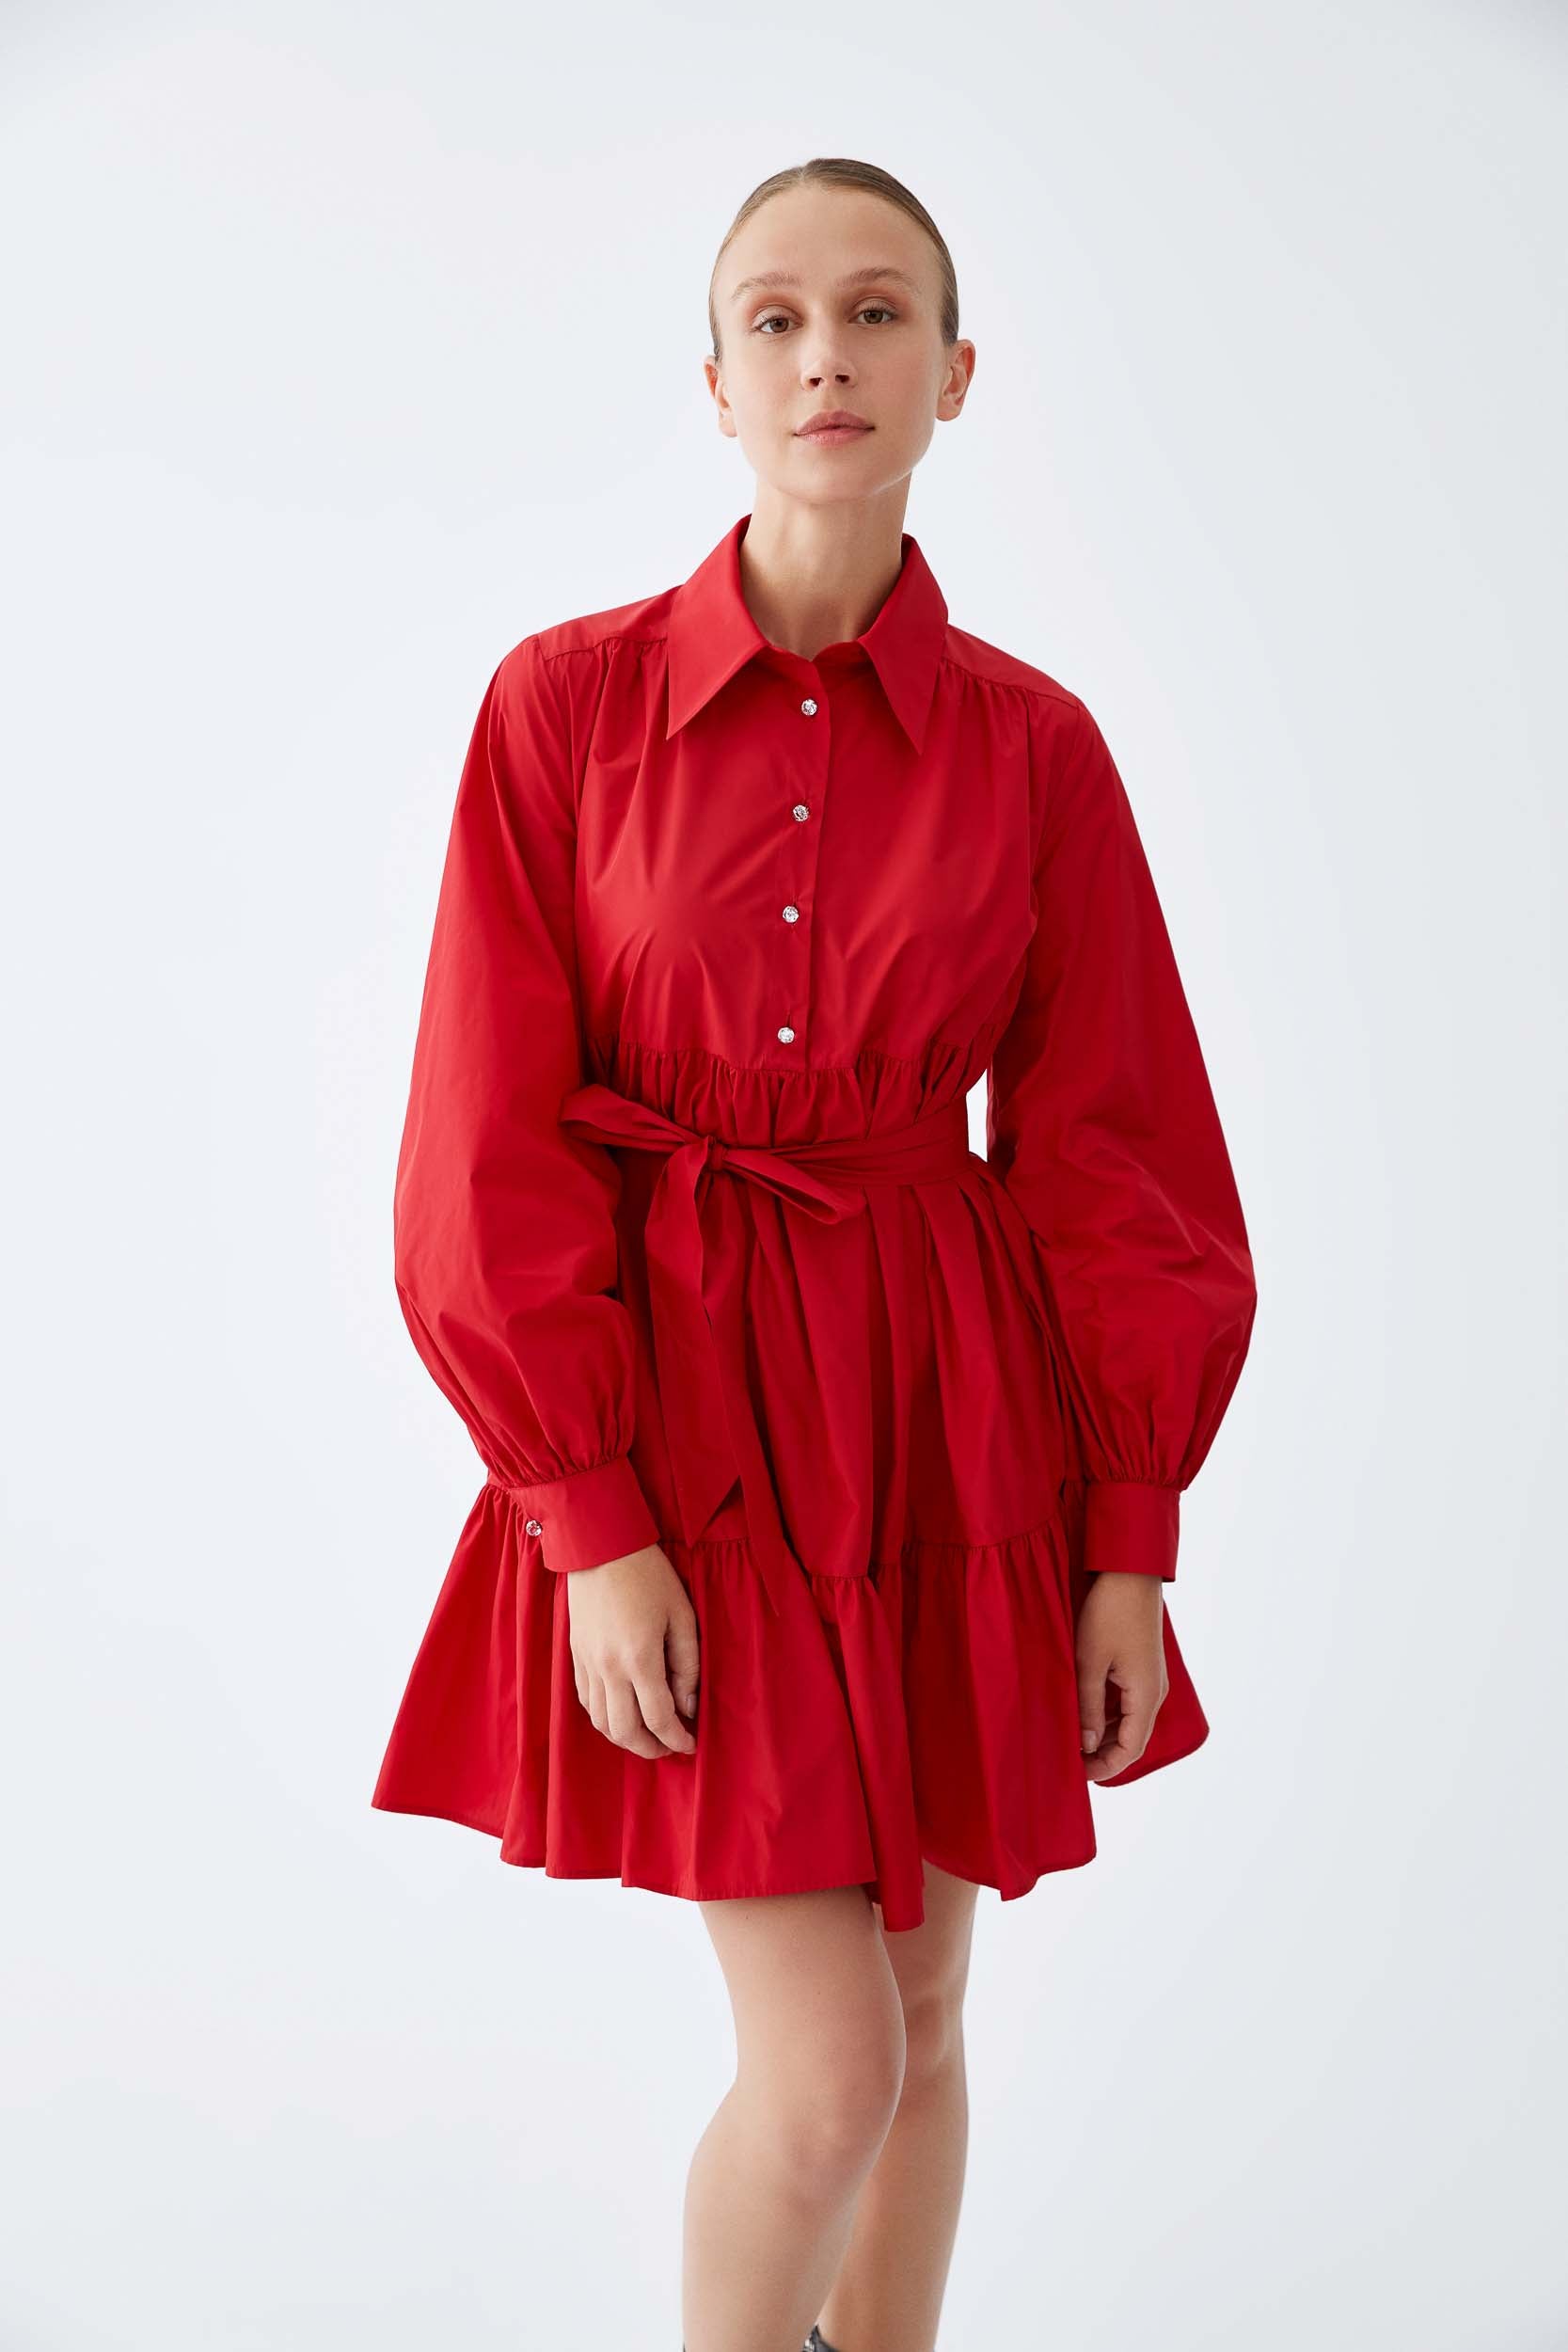 Sash Detailed Red Mini Dress